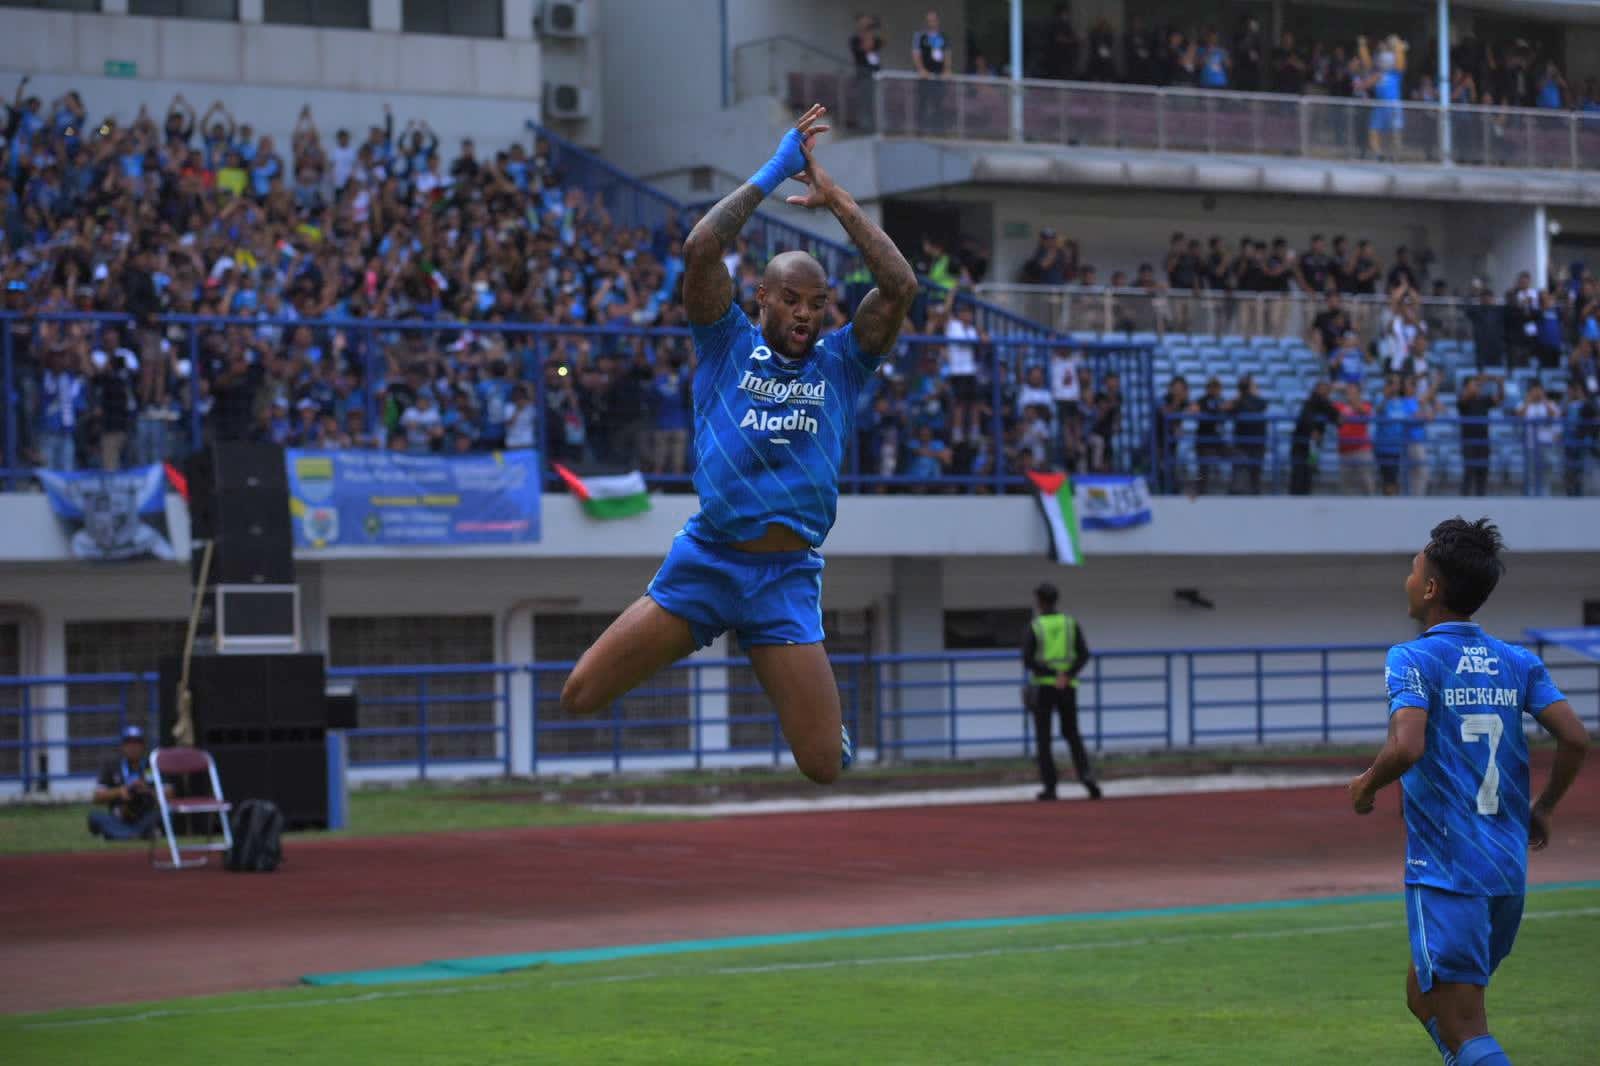 Striker Persib Bandung David da Silva melakukan selebrasi usai mencetak gol. Foto: Darwin Sandy/HALOSMI.